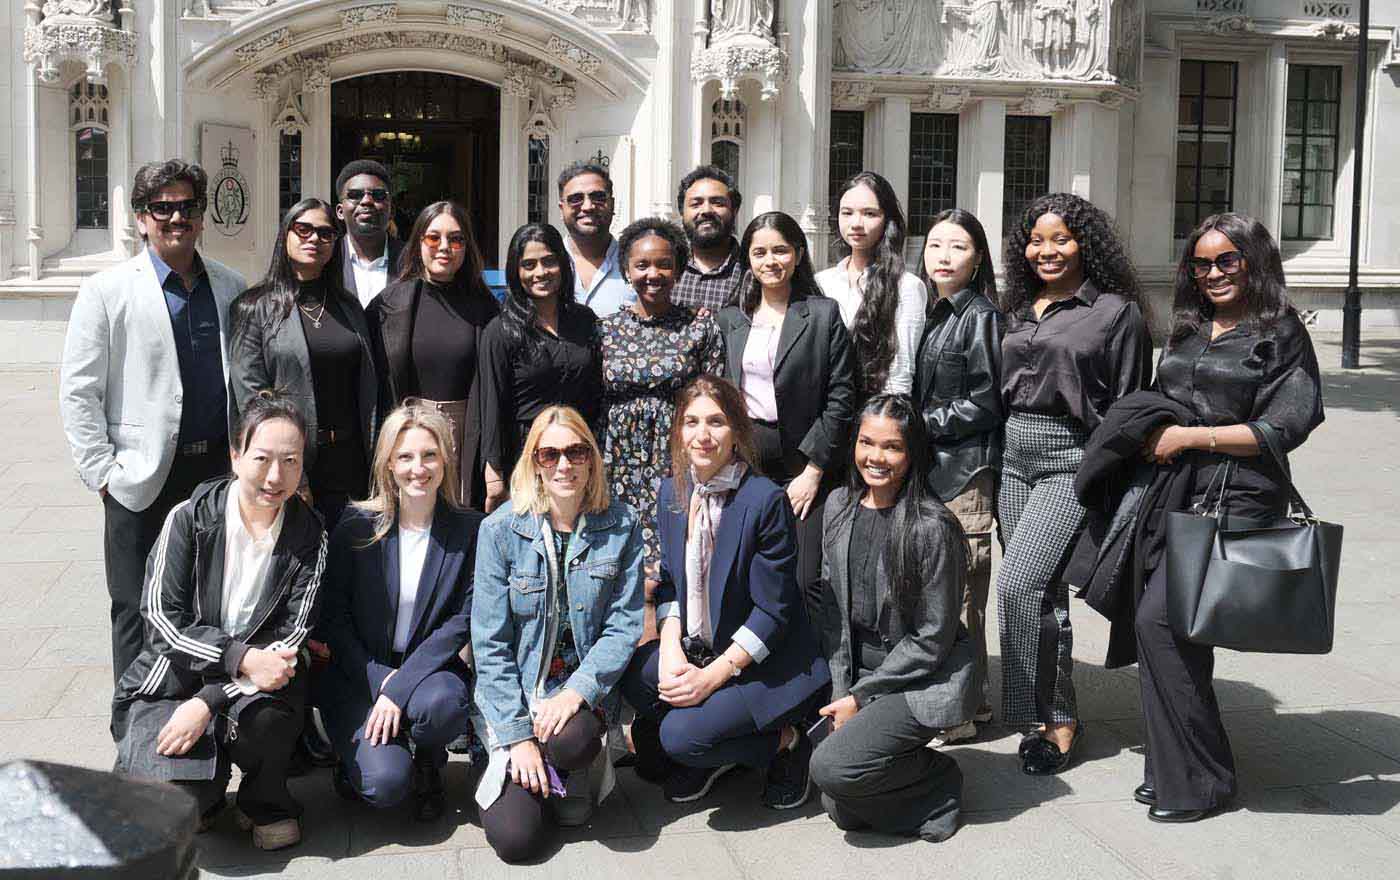 LLM LegalTech Students Enjoy Educational Trip to London